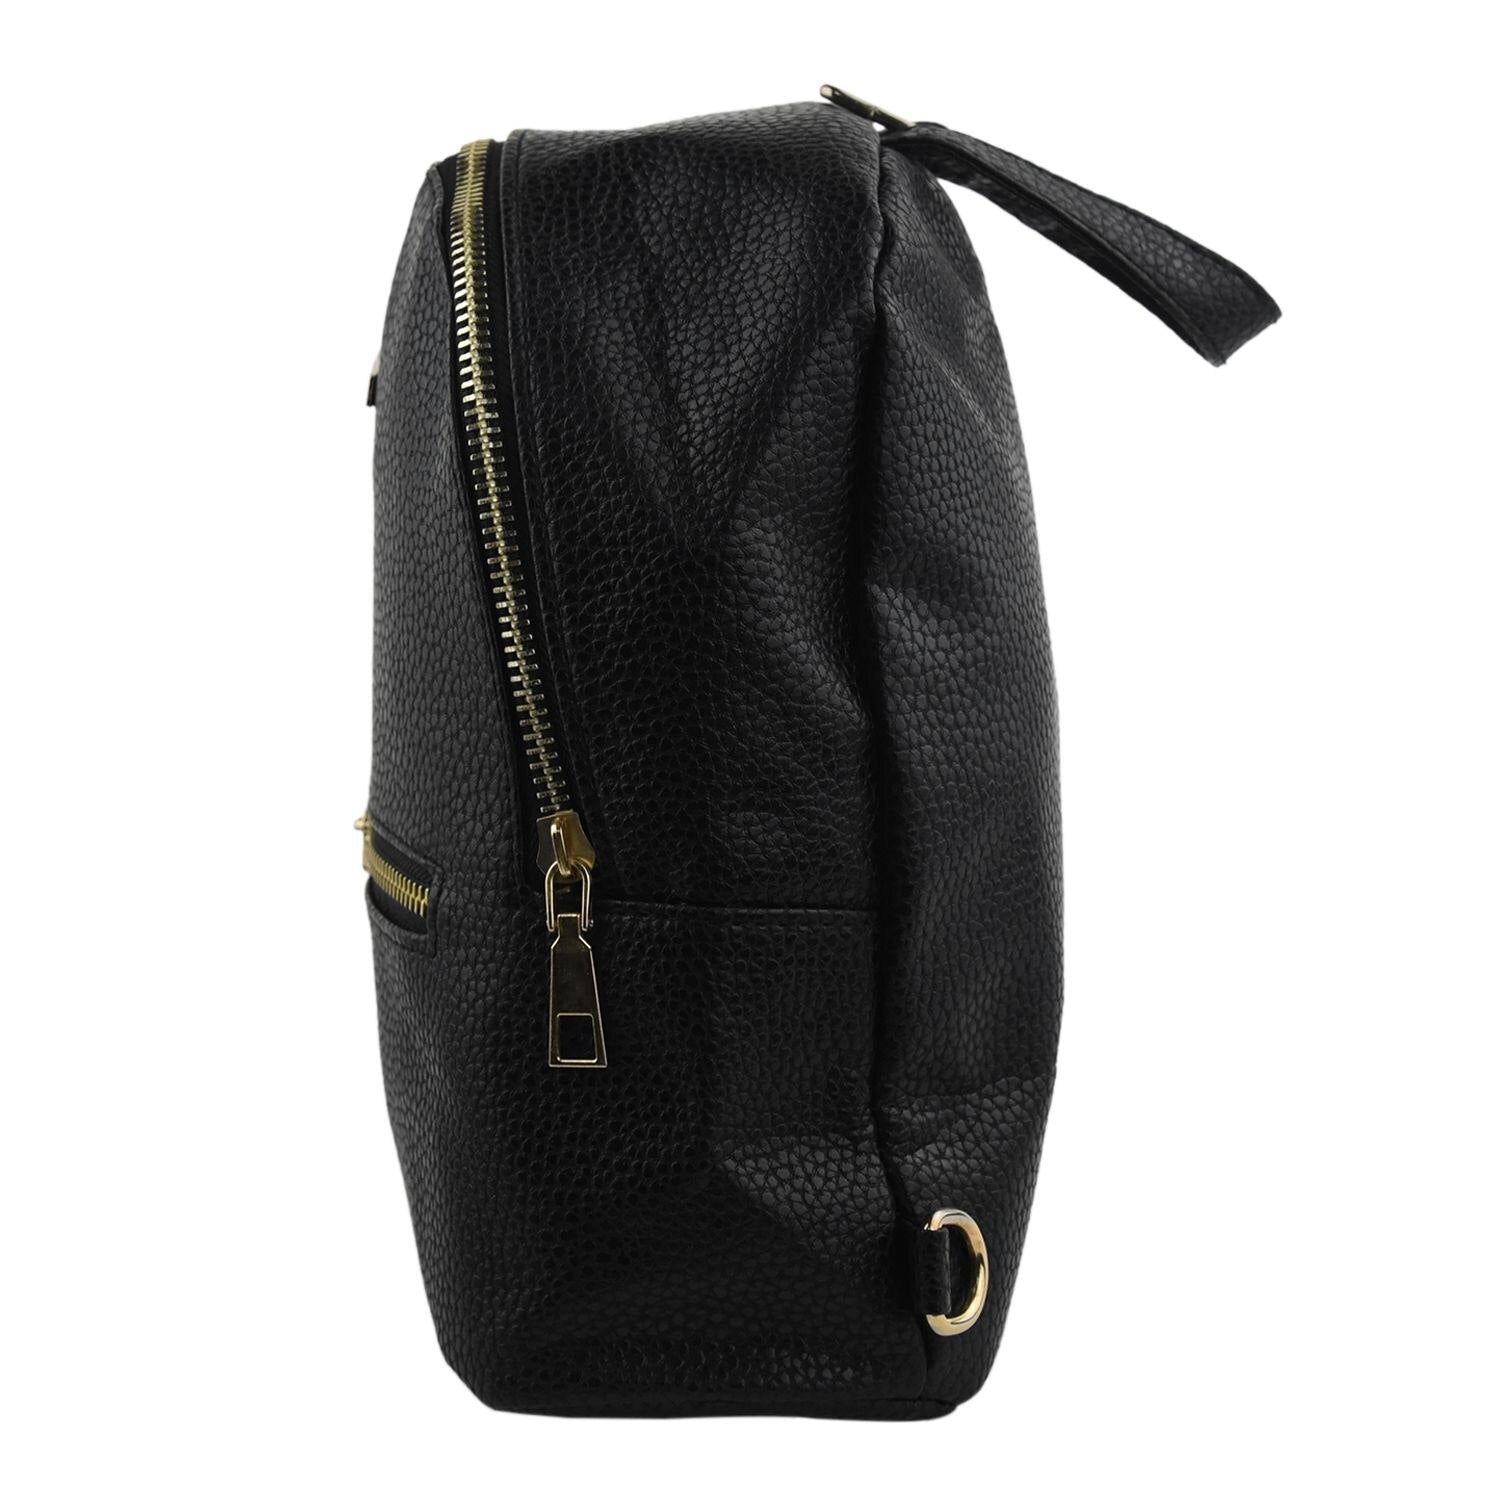 New New Fashion Women Backpacks Travel Rucksack Backpacks School Bag High Quality - ebowsos